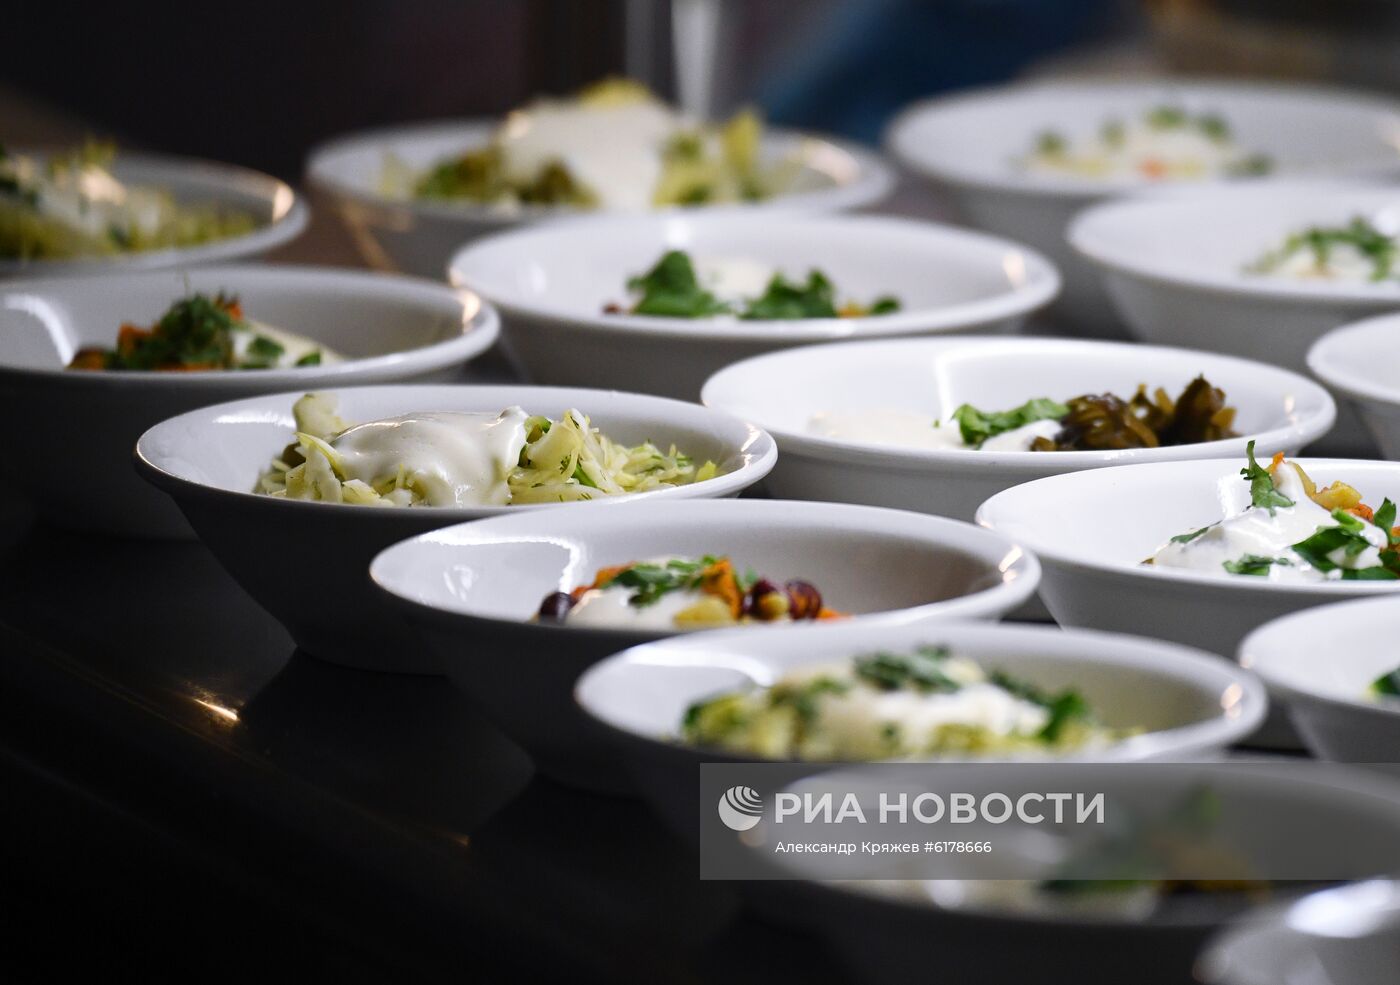 МАУ "Комбинат питания" в Новосибирске  